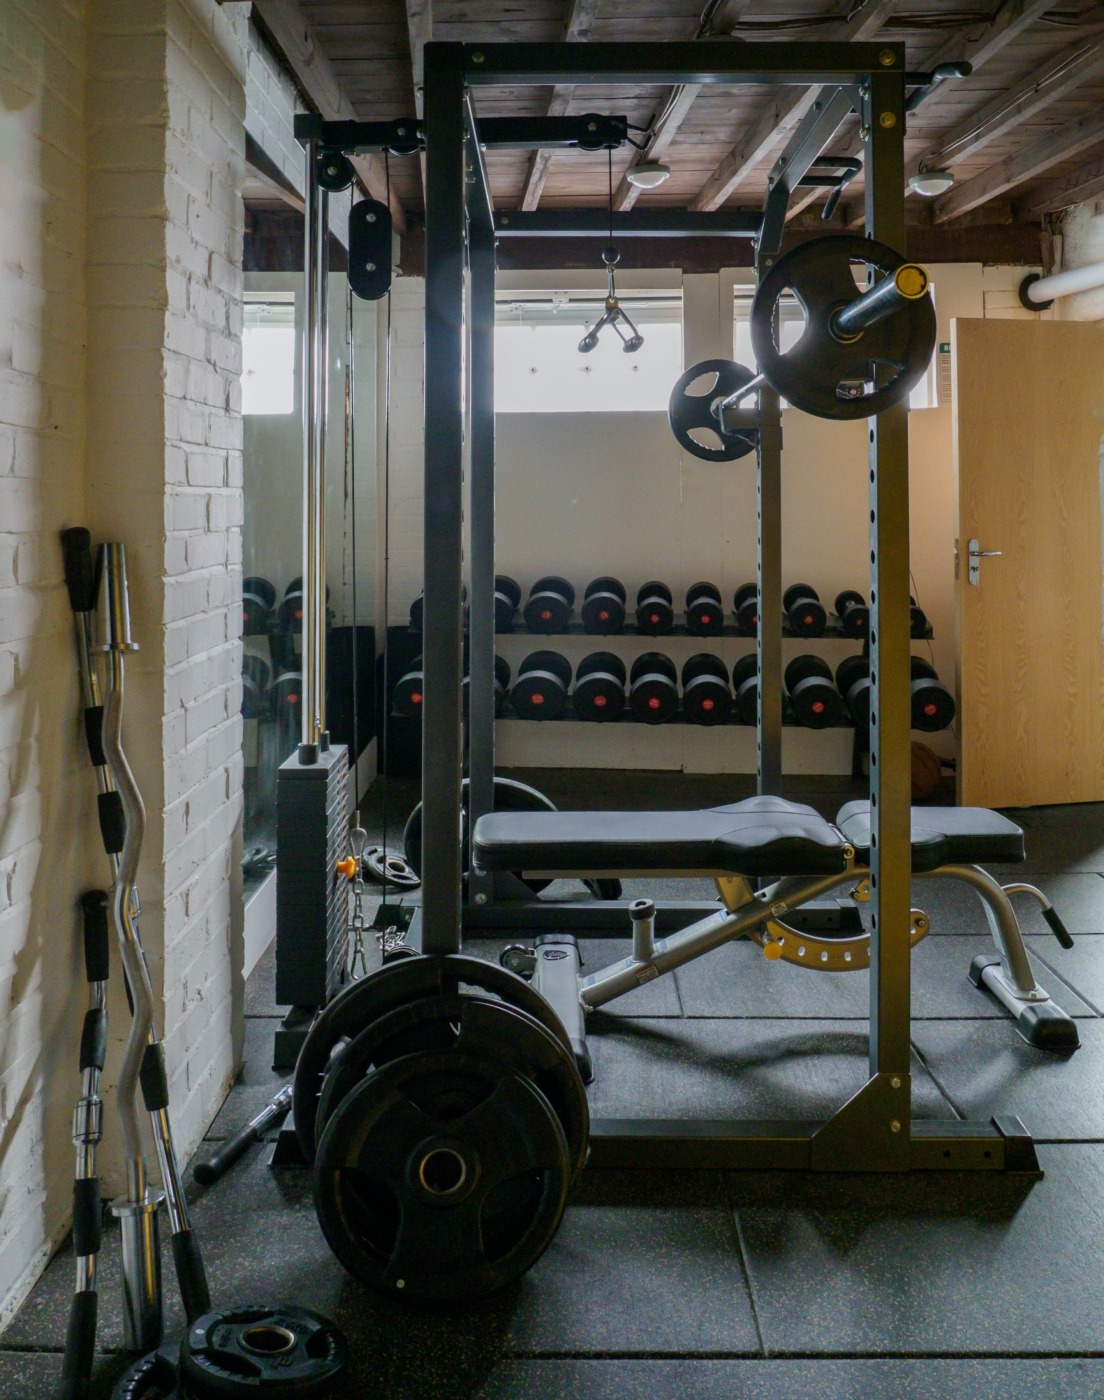 The Inside of a Gym / Image: Unsplash